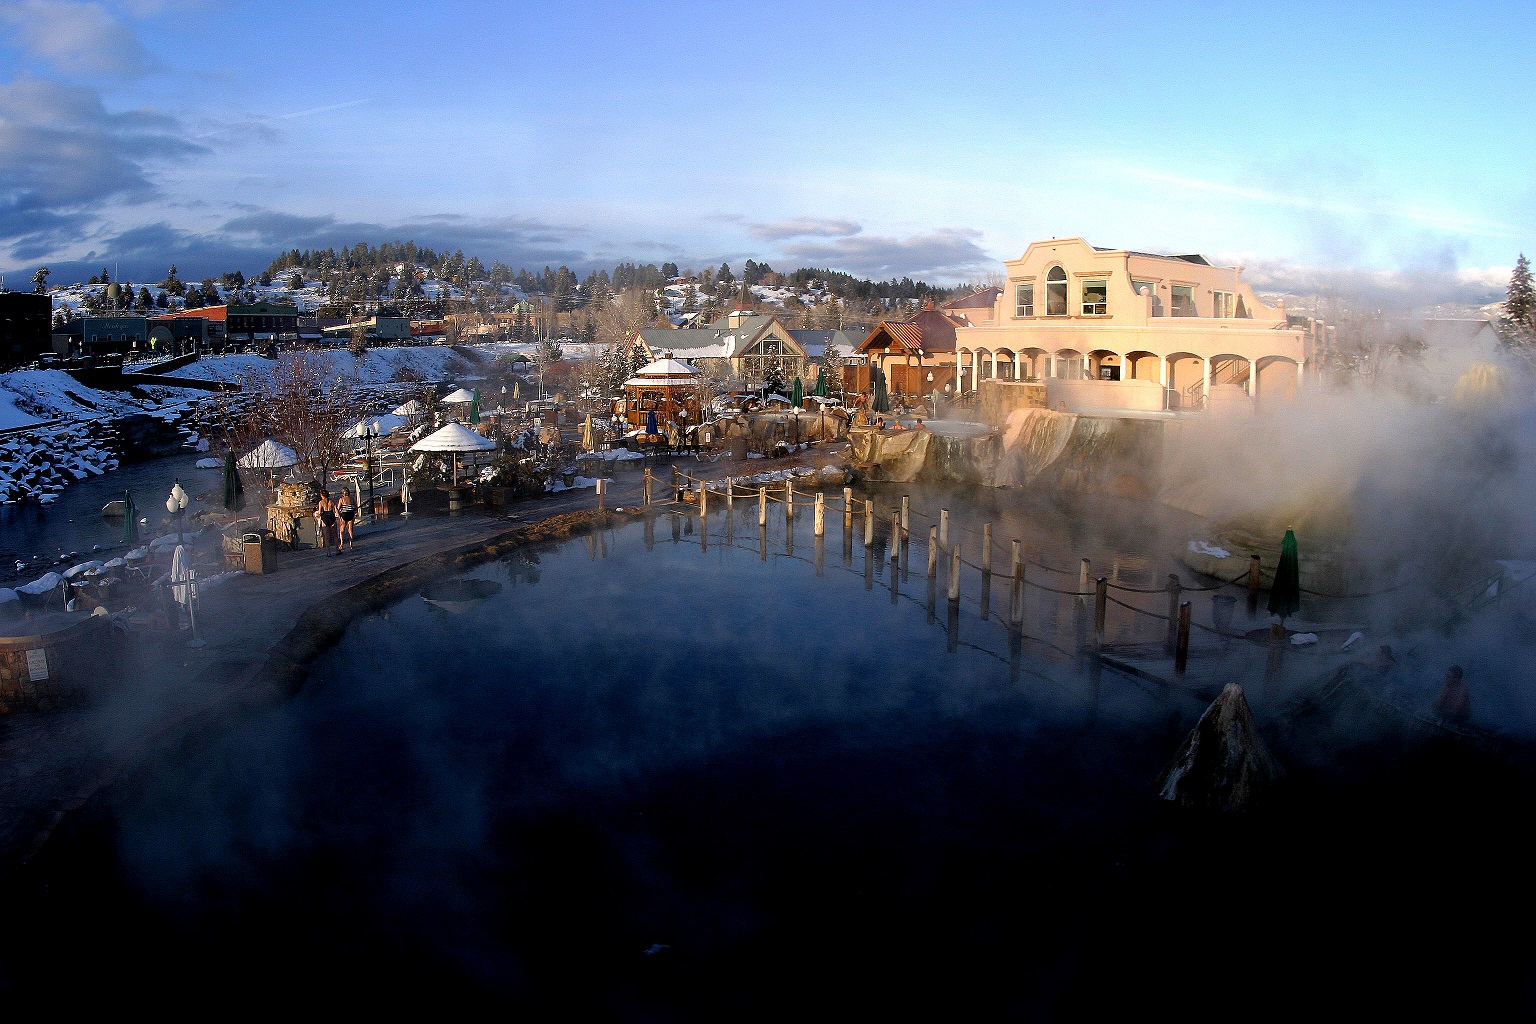 pagosa springs hot springs information